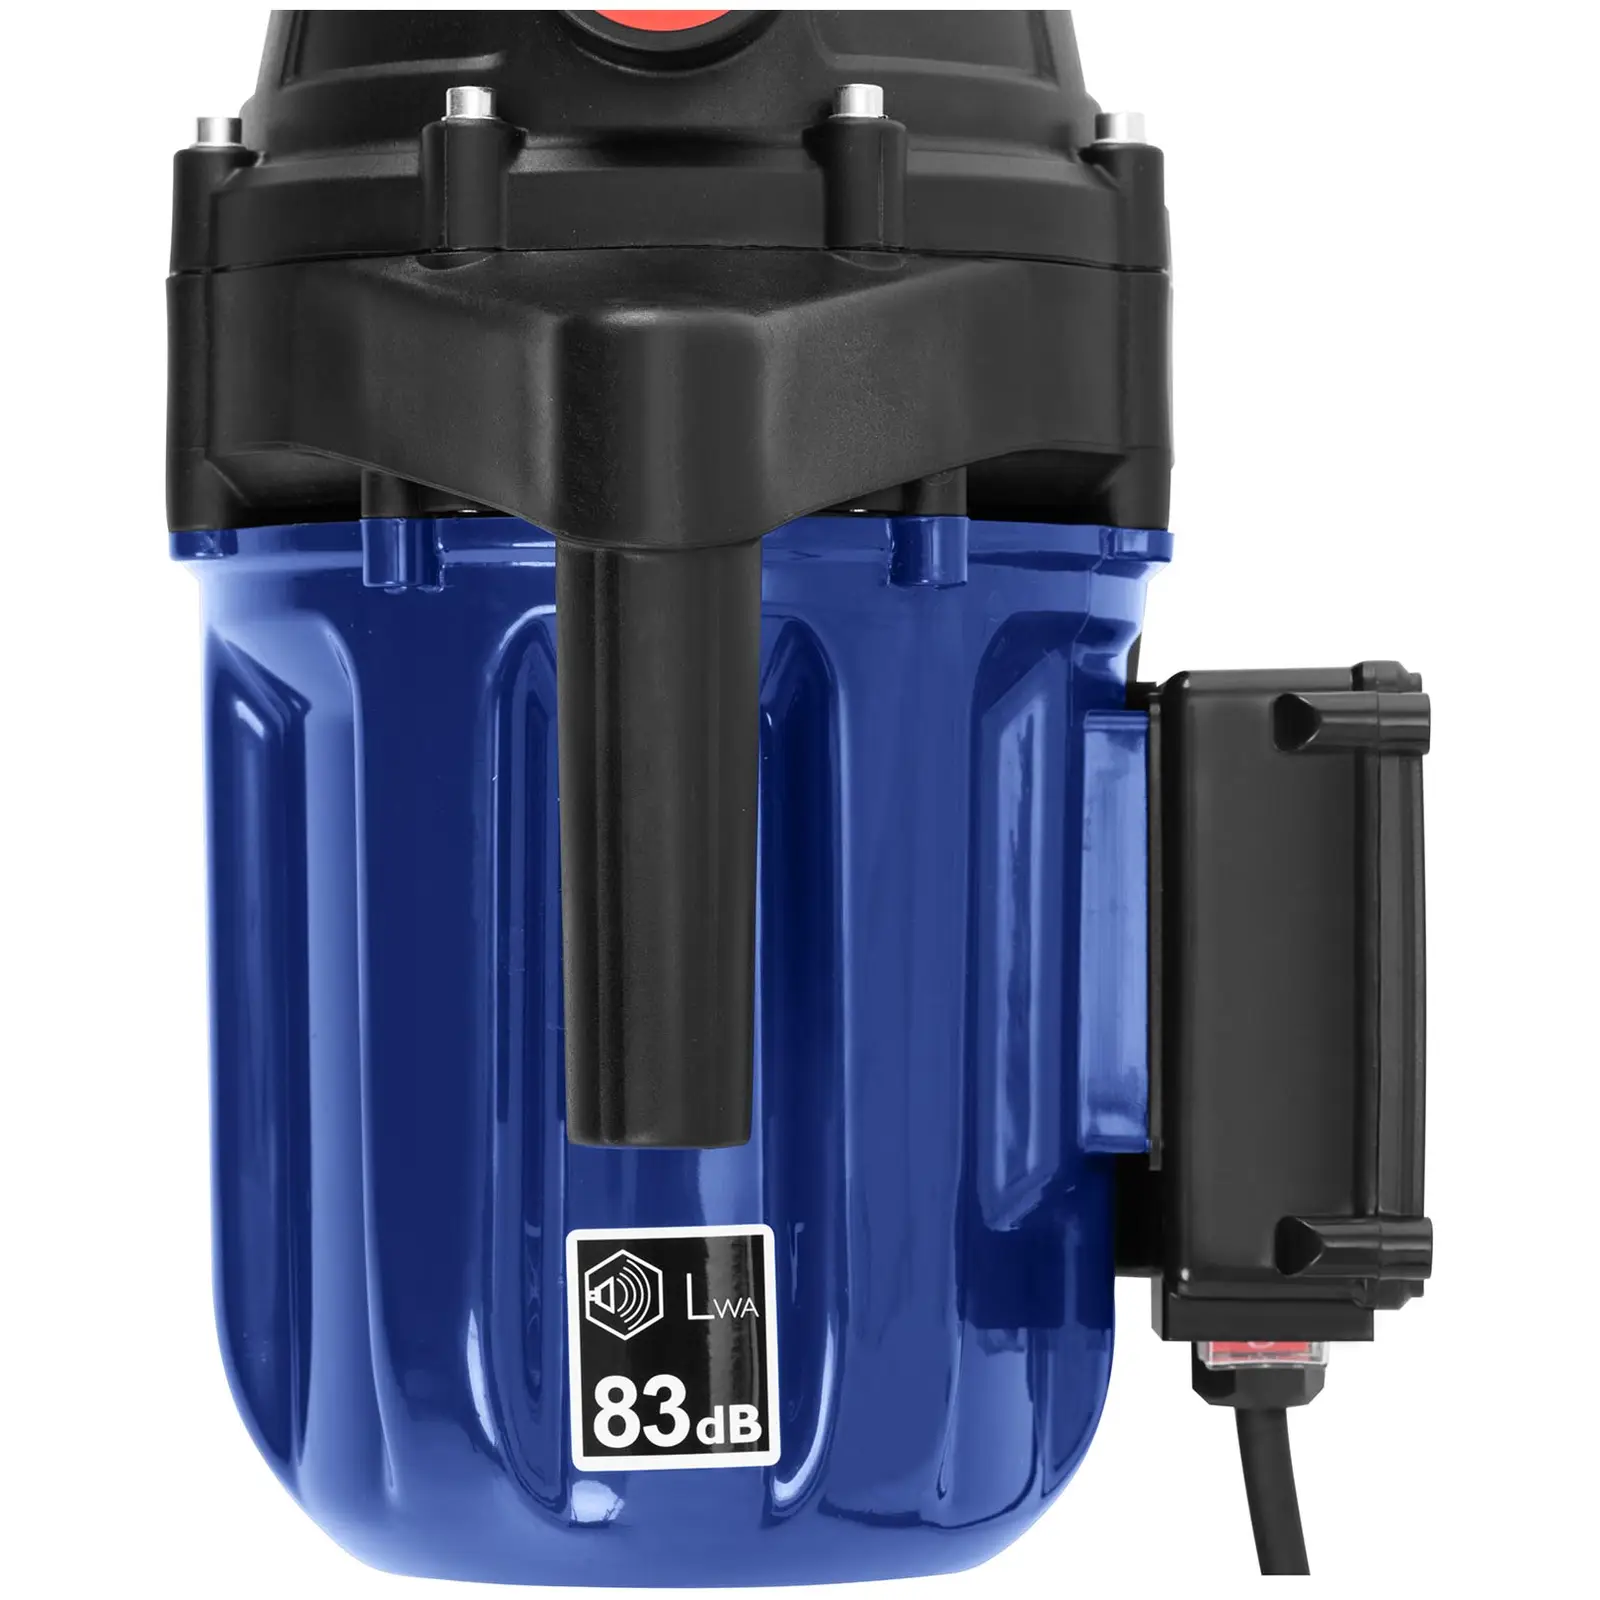 Pompa autoadescante - 800 W - 3.2 m³/h - 3,8 bar - Plastica